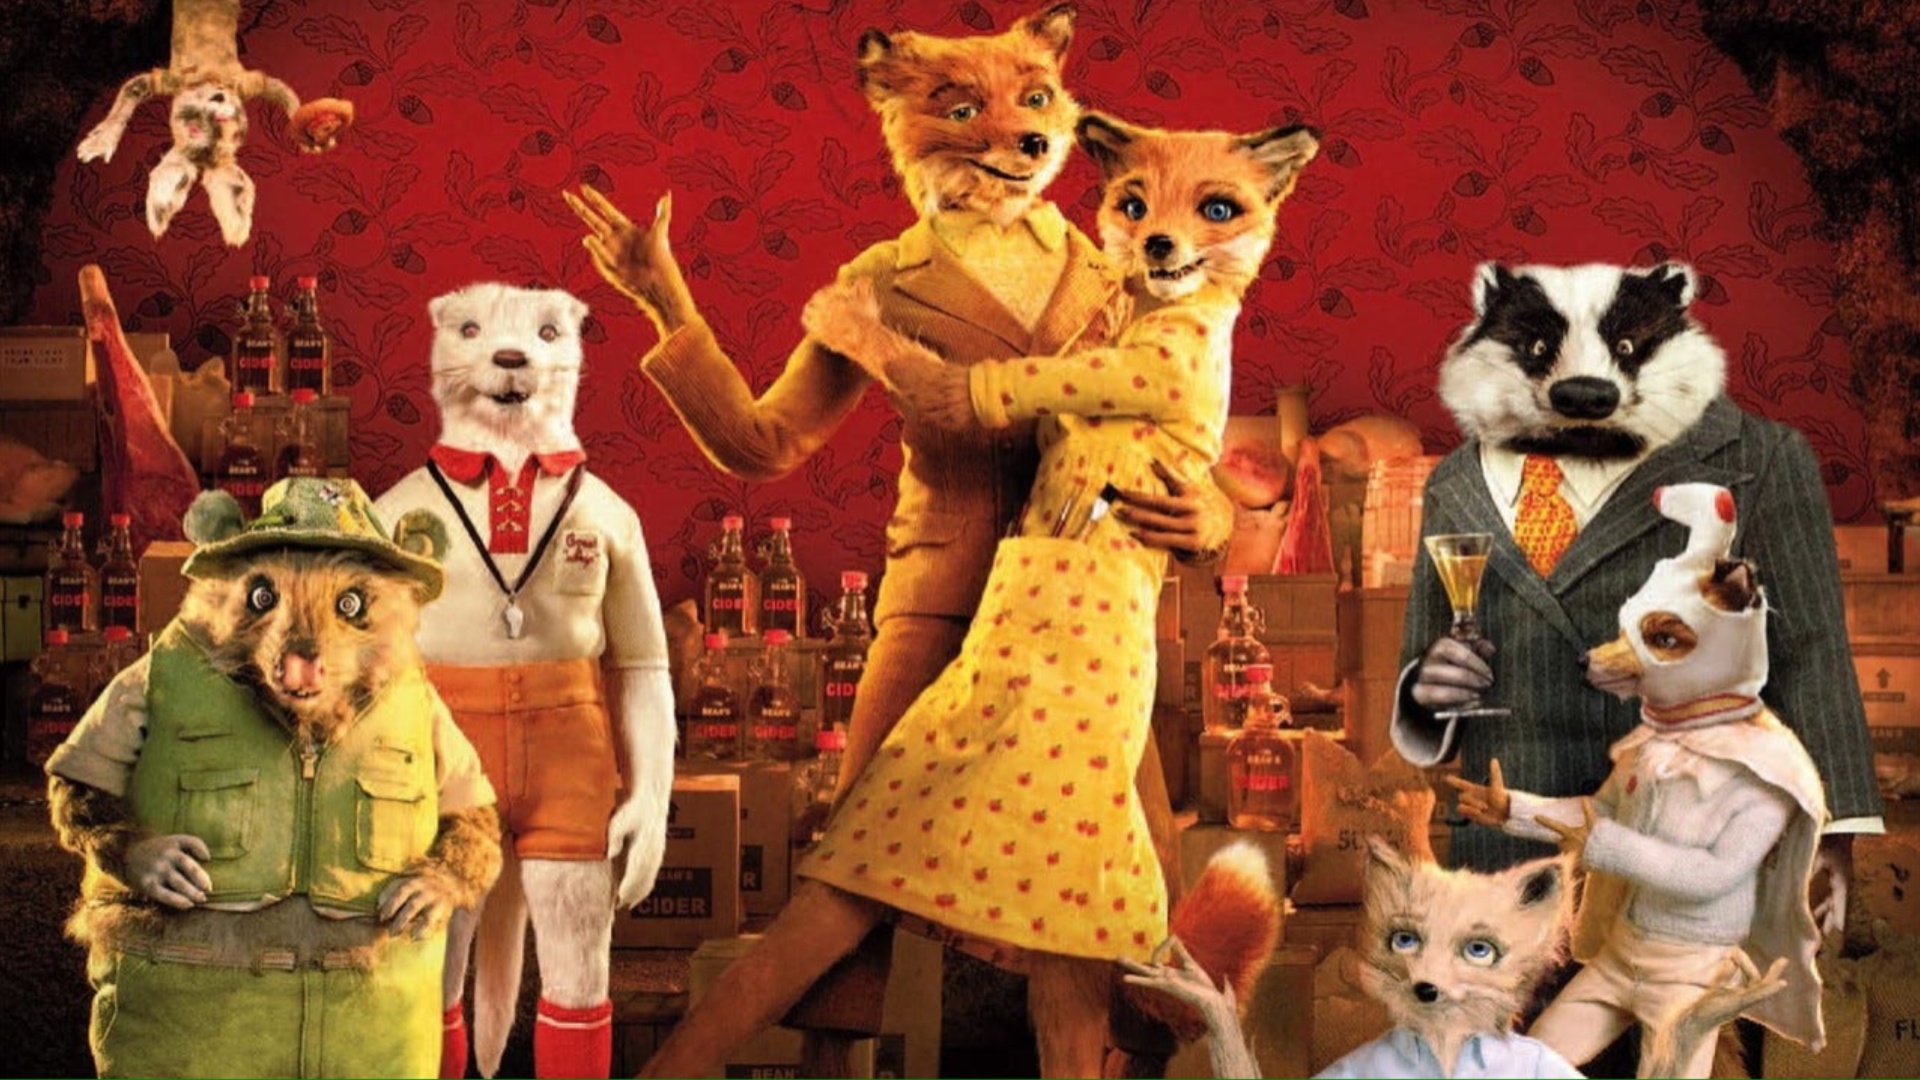 Promo art featuring the animal cast of Fantastic Mr. Fox.